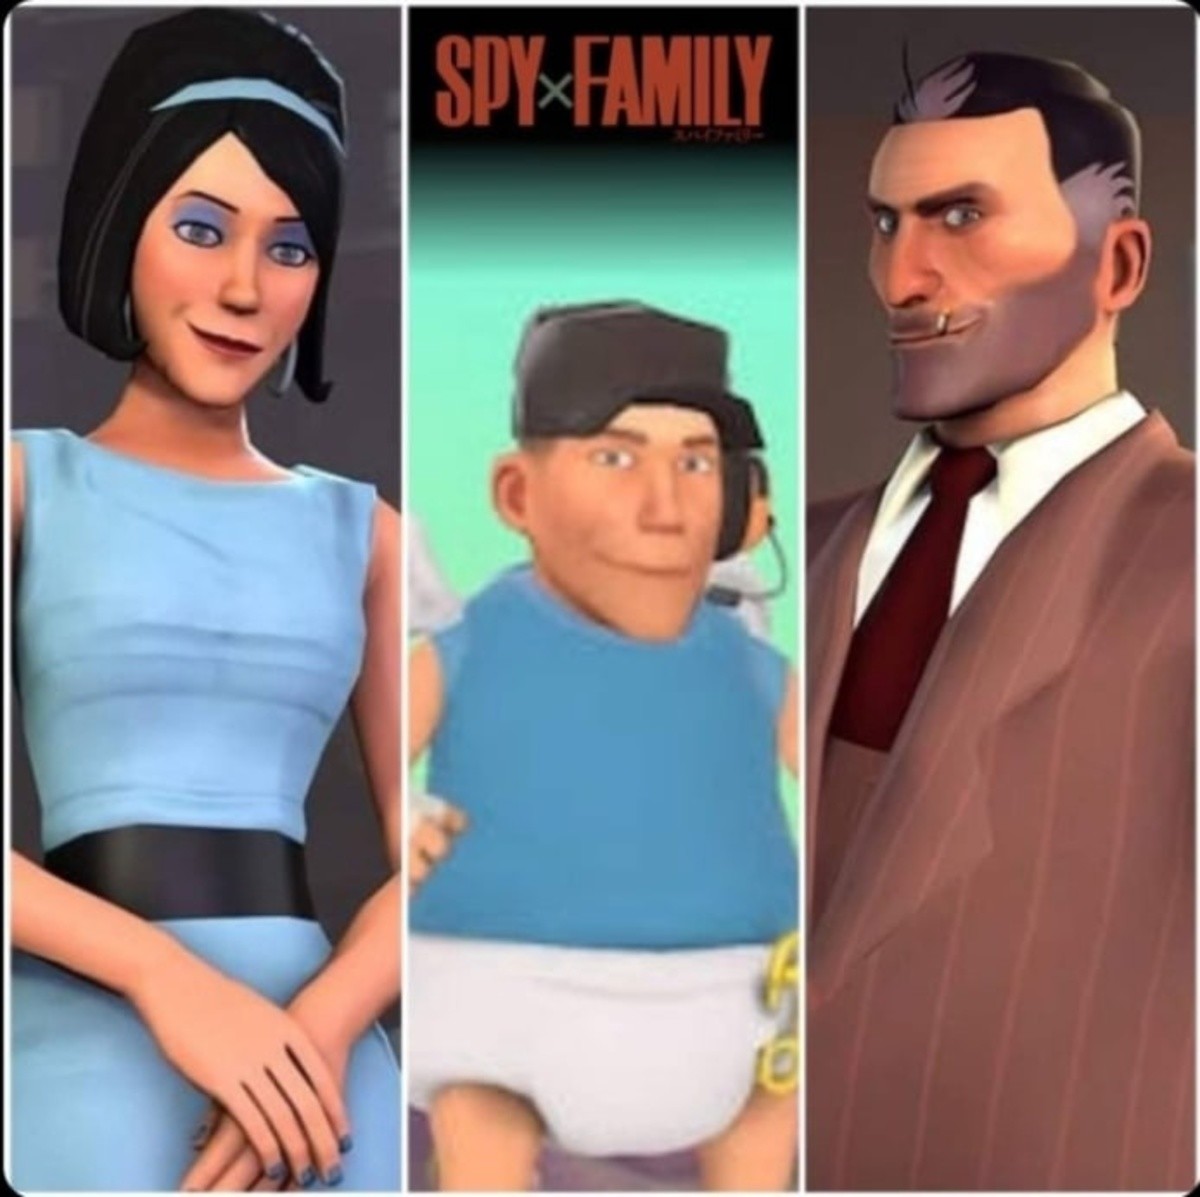 Spy x family tf2